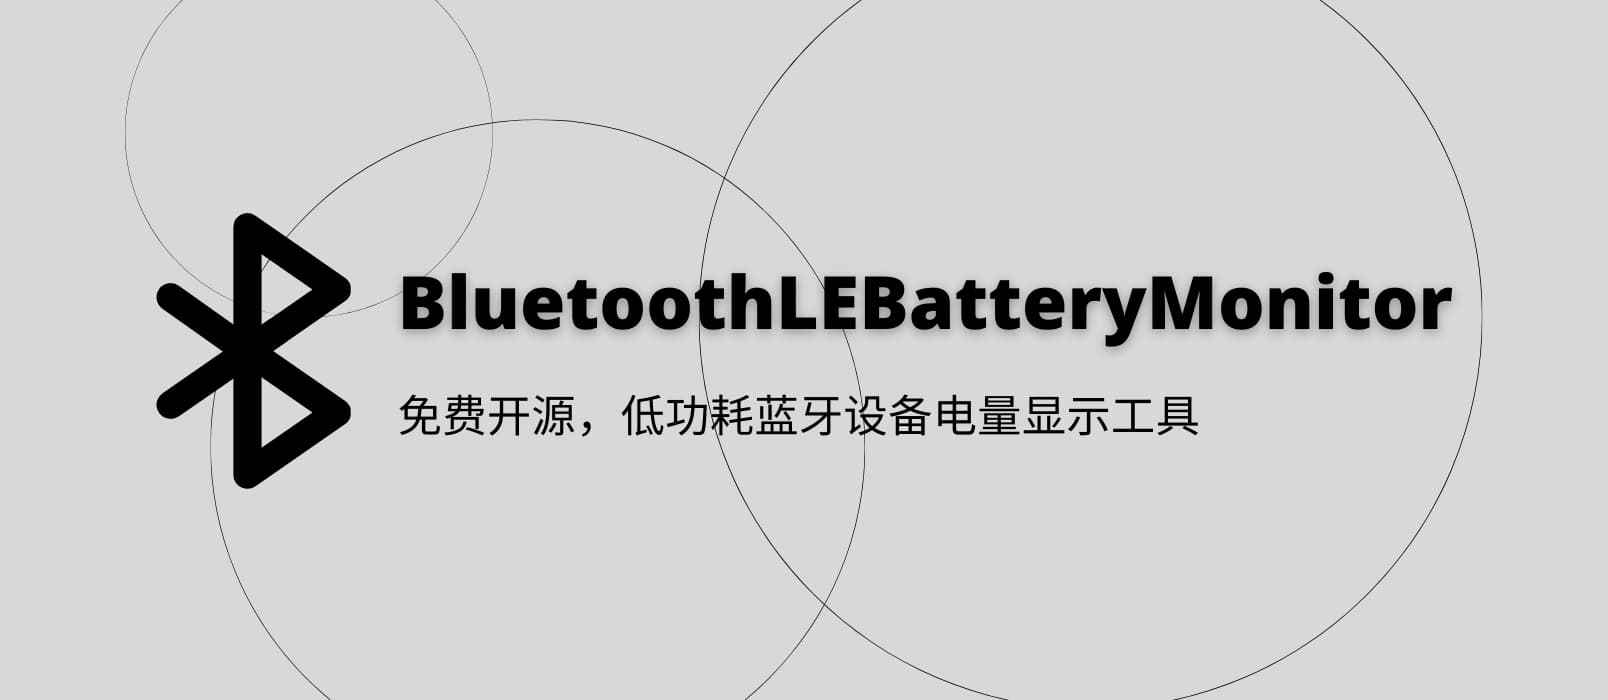 BluetoothLE Battery Monitor - 免费开源，低功耗蓝牙设备电量显示工具[Windows]